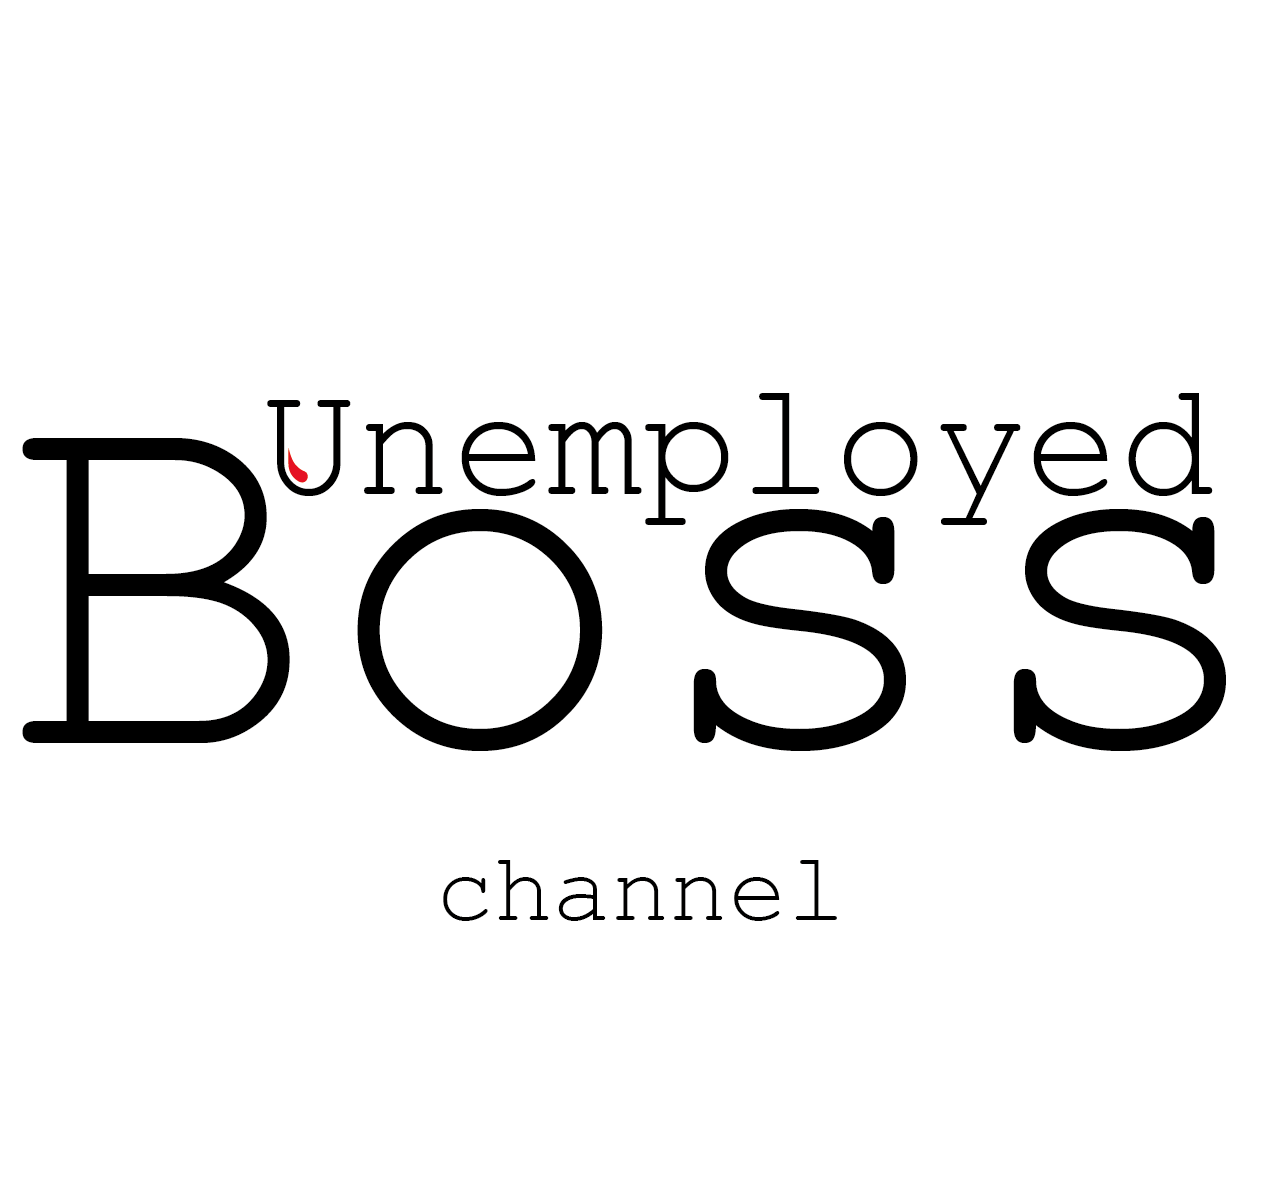 Unemployed Boss